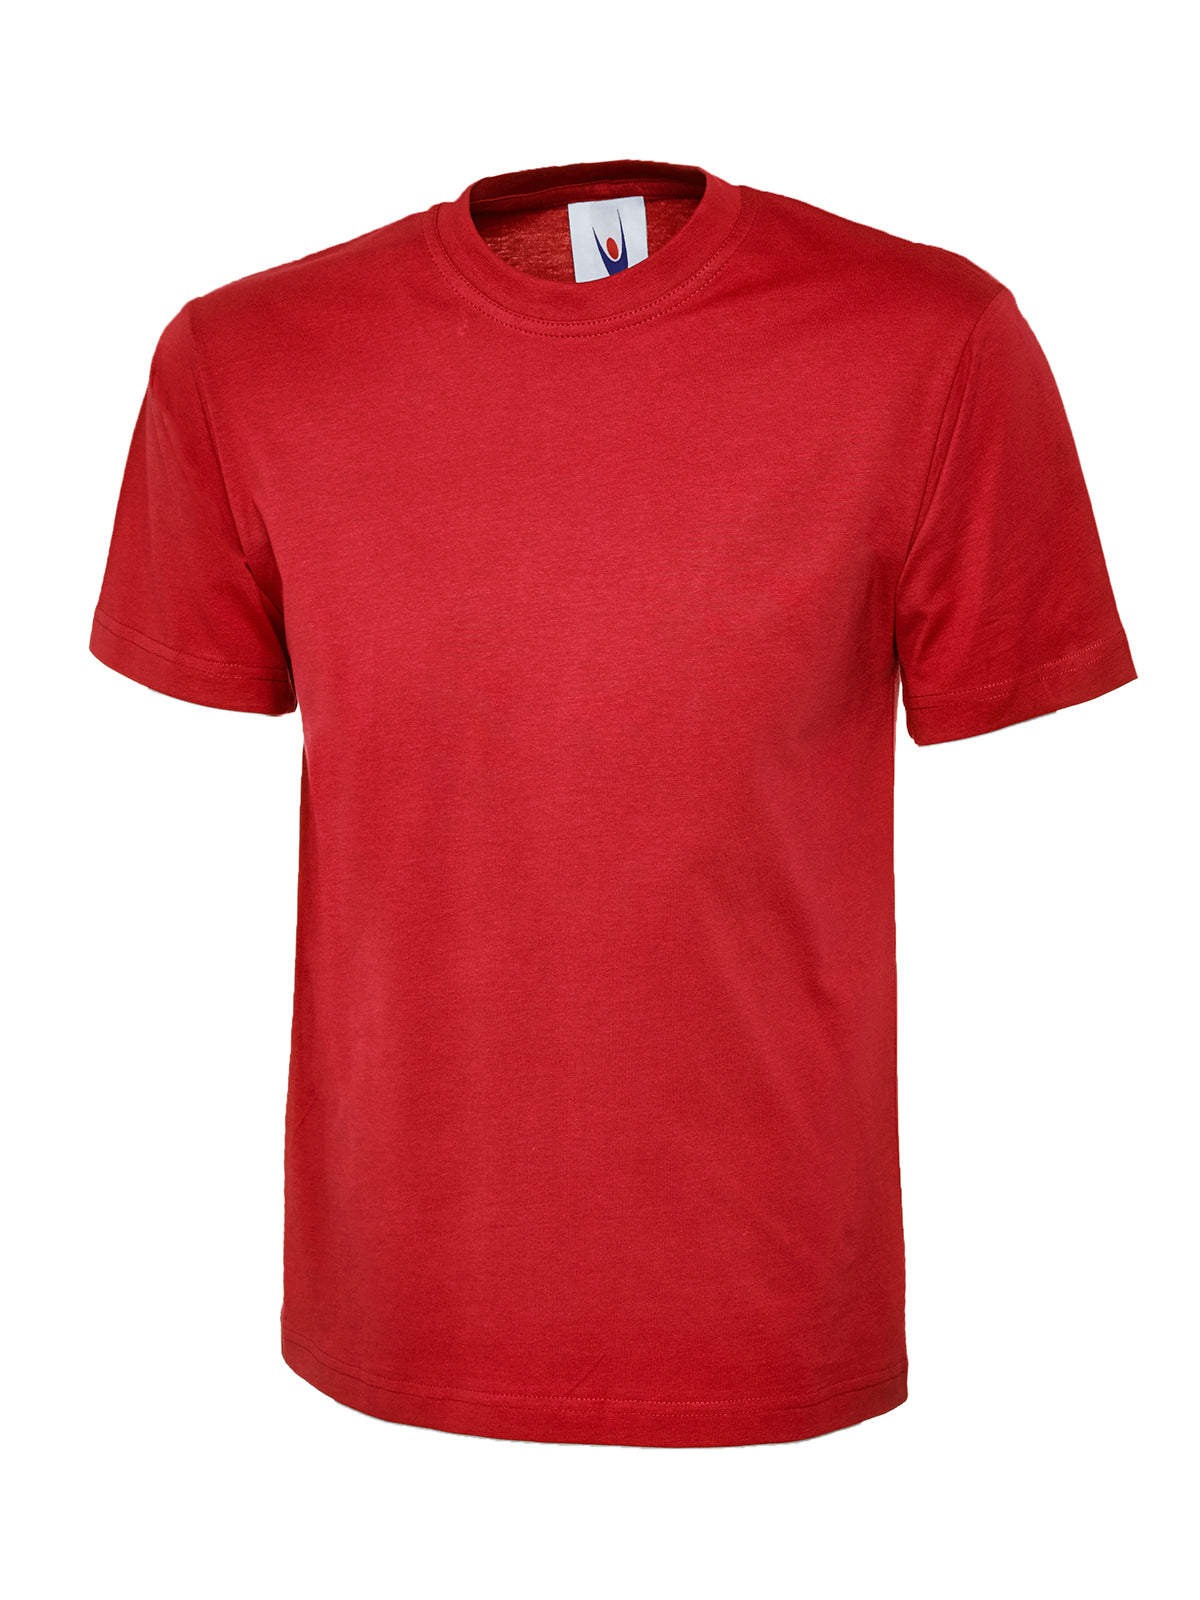 Uneek Classic T-shirt - Red